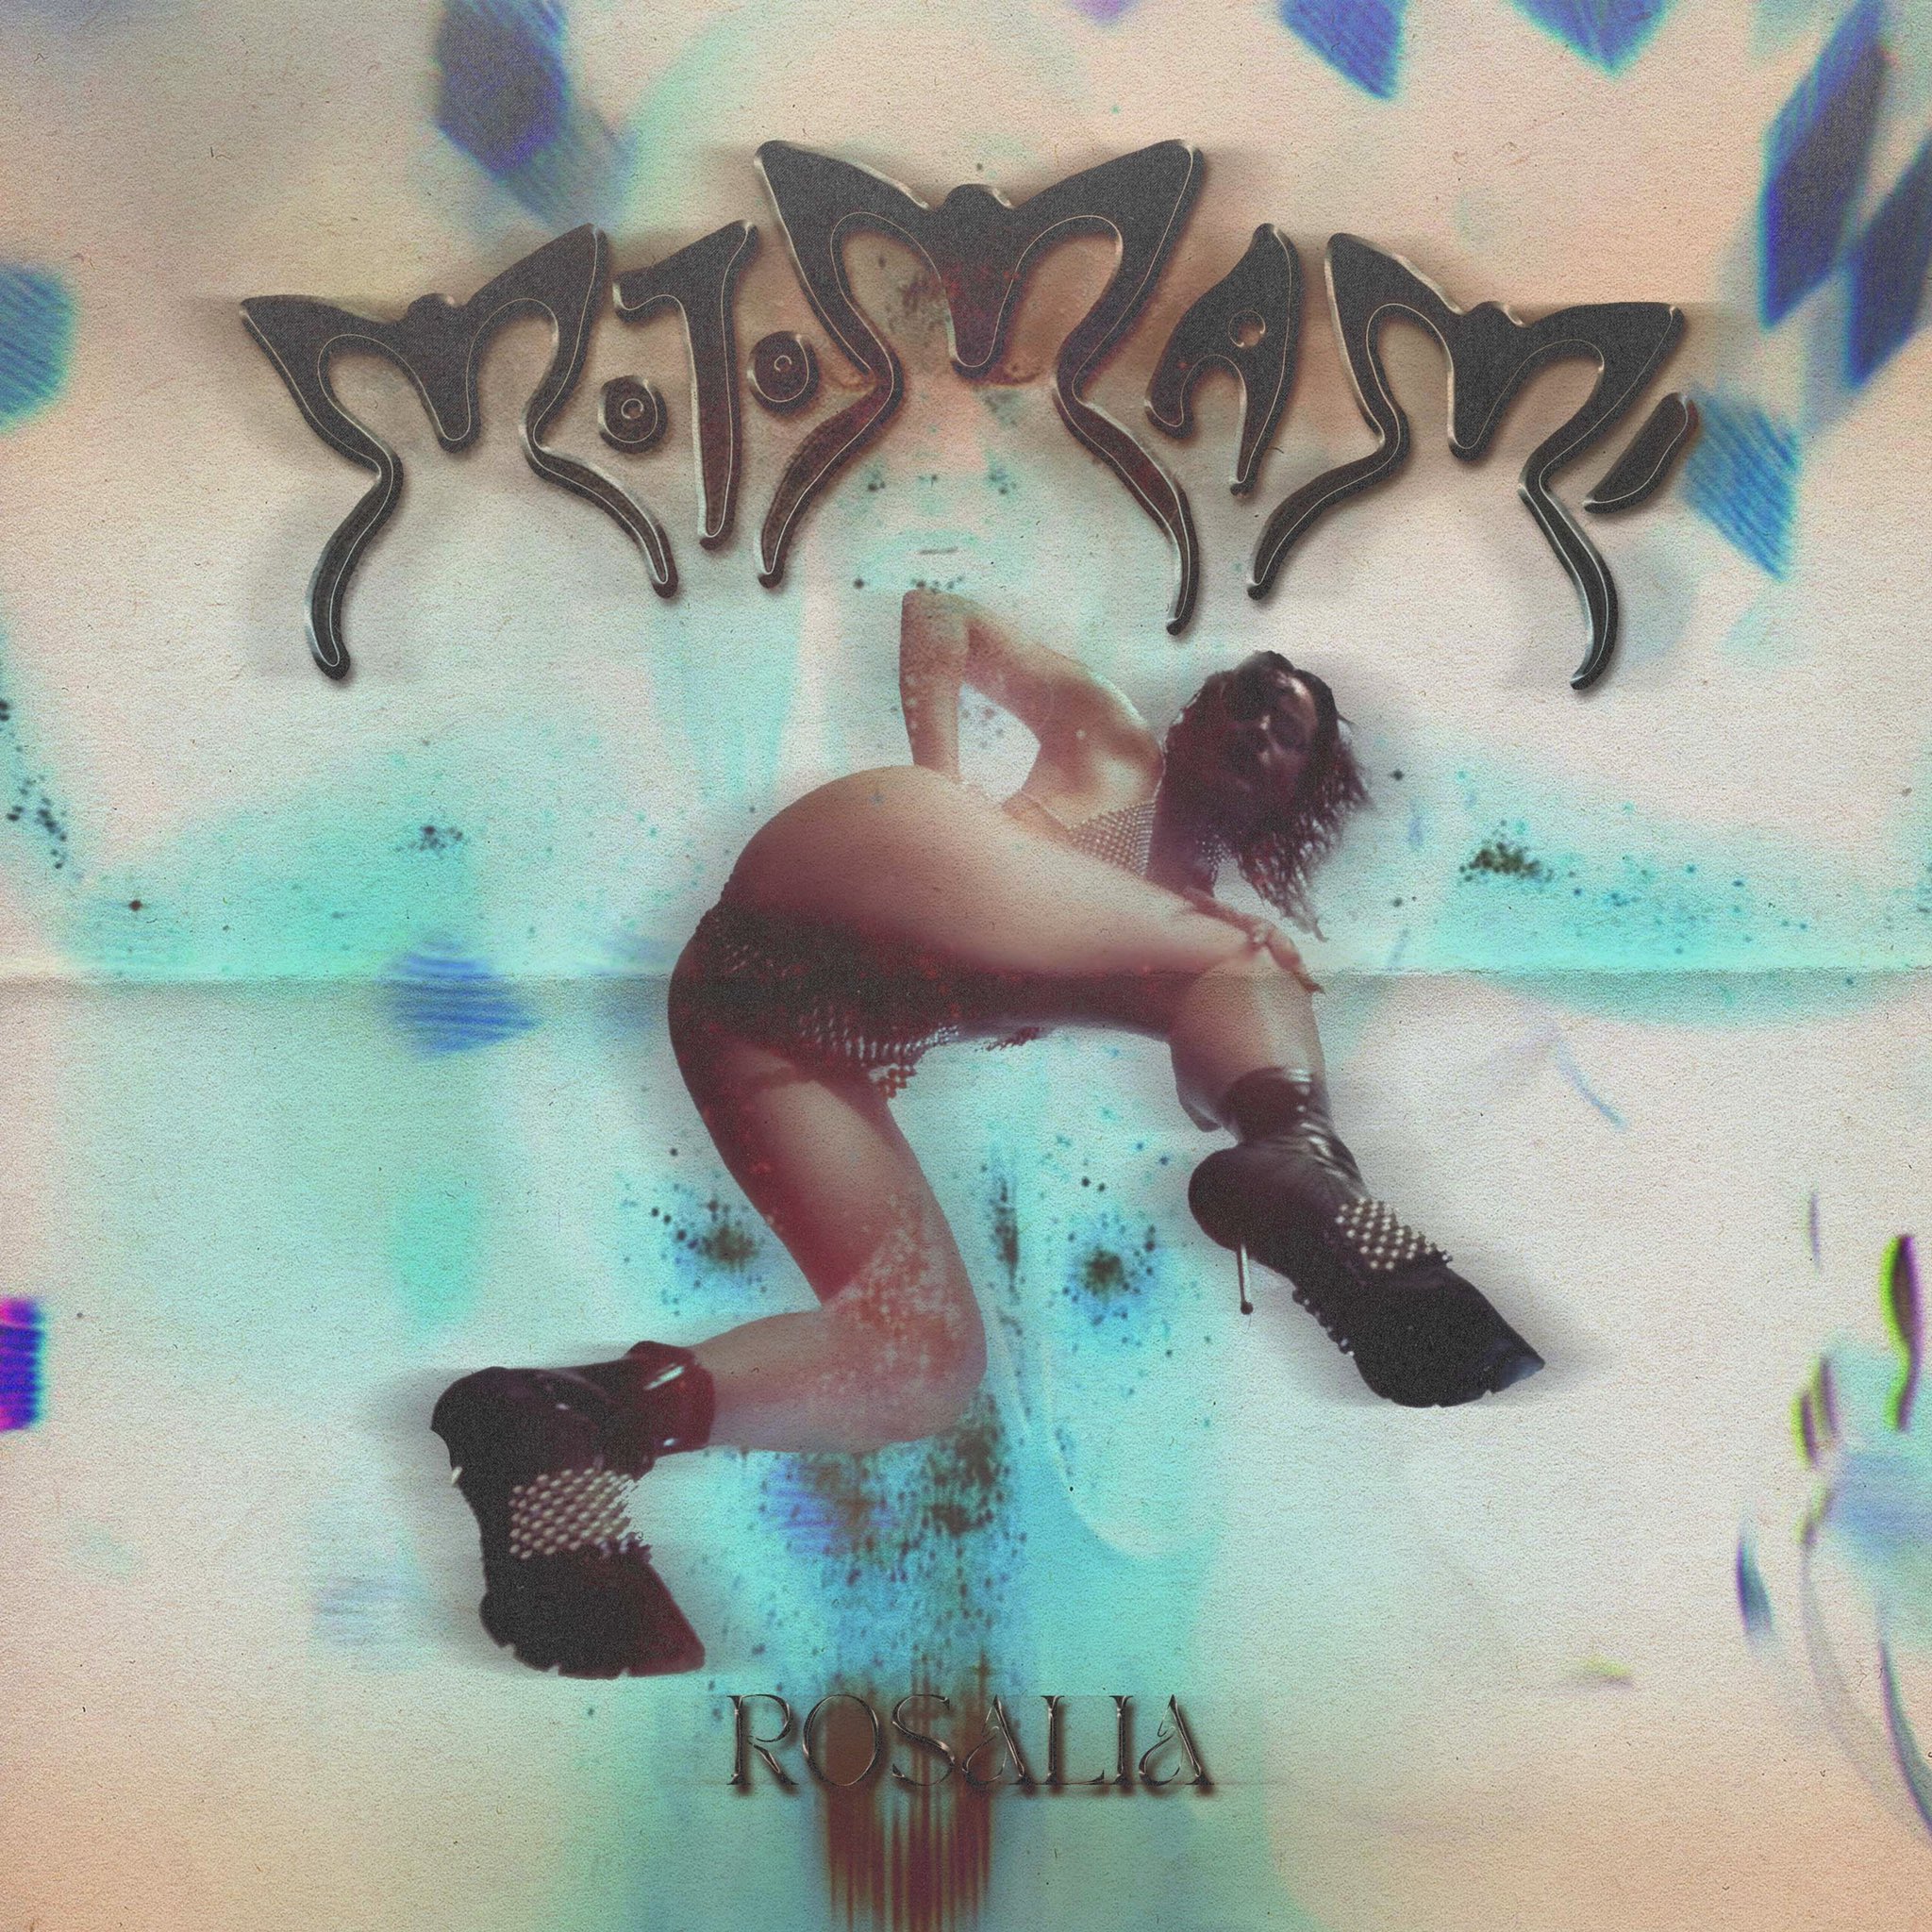 marina ???????? ݁ ⟡ ݁ ۫ ???? ⭒ ݁ on Twitter: "MOTOMAMI album/single concepts by  me for @rosalia 's upcoming album coming in 2022 #Rosalia #motomami  https://t.co/naznGgYCMB" / Twitter